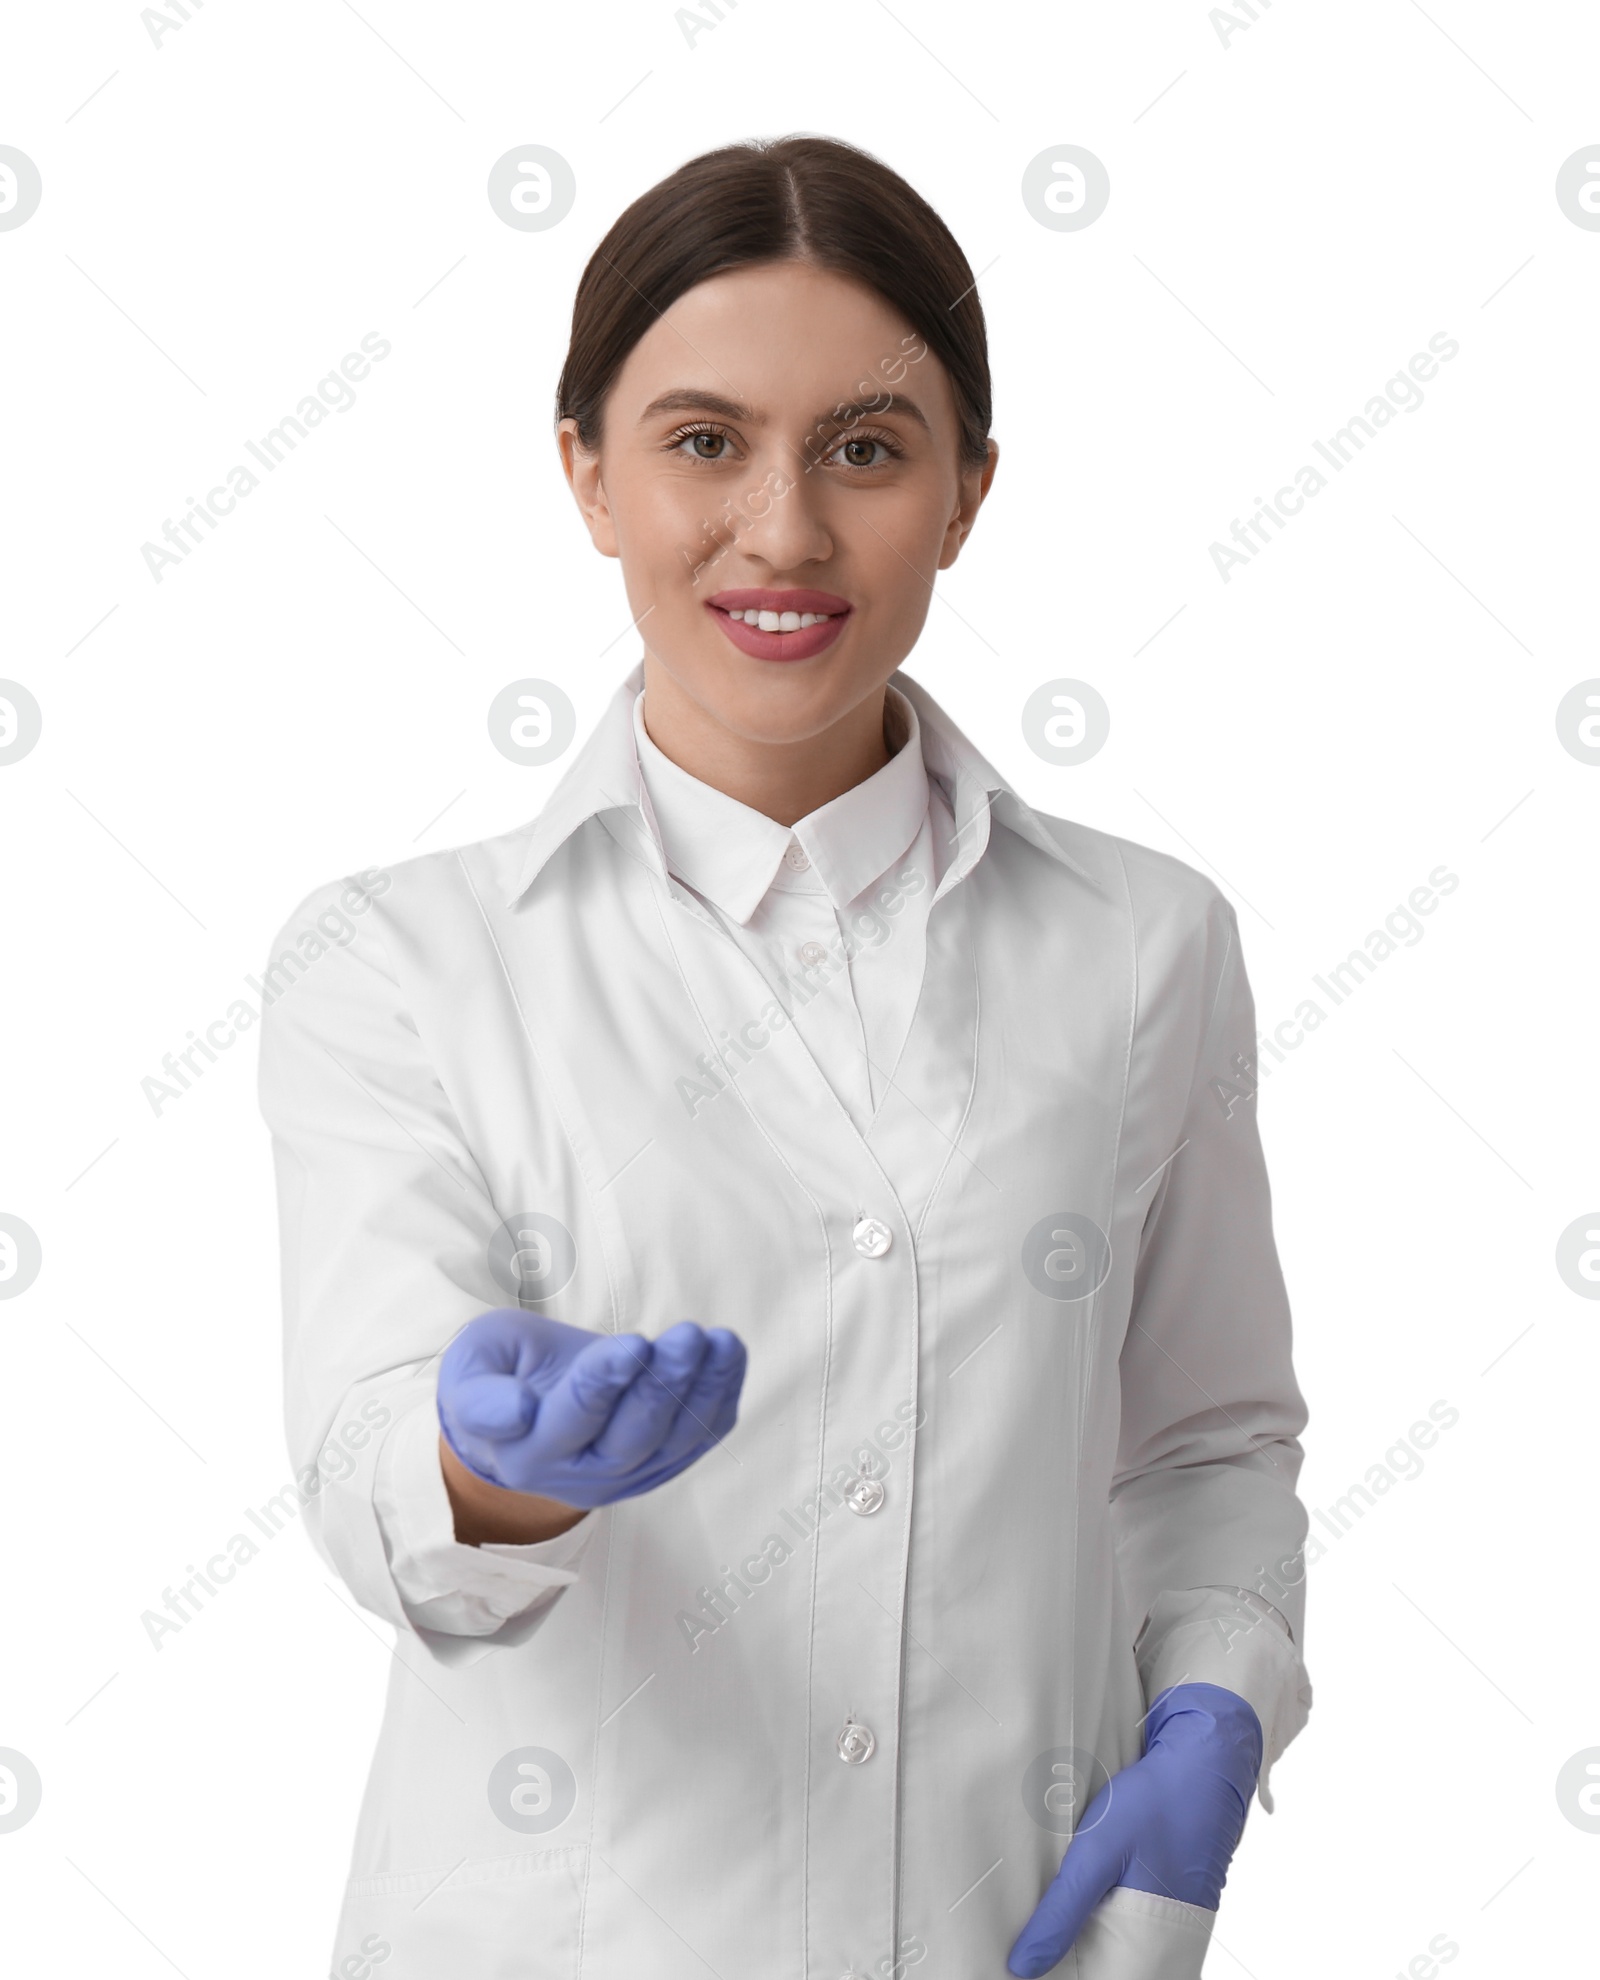 Photo of Doctor in coat holding something on white background